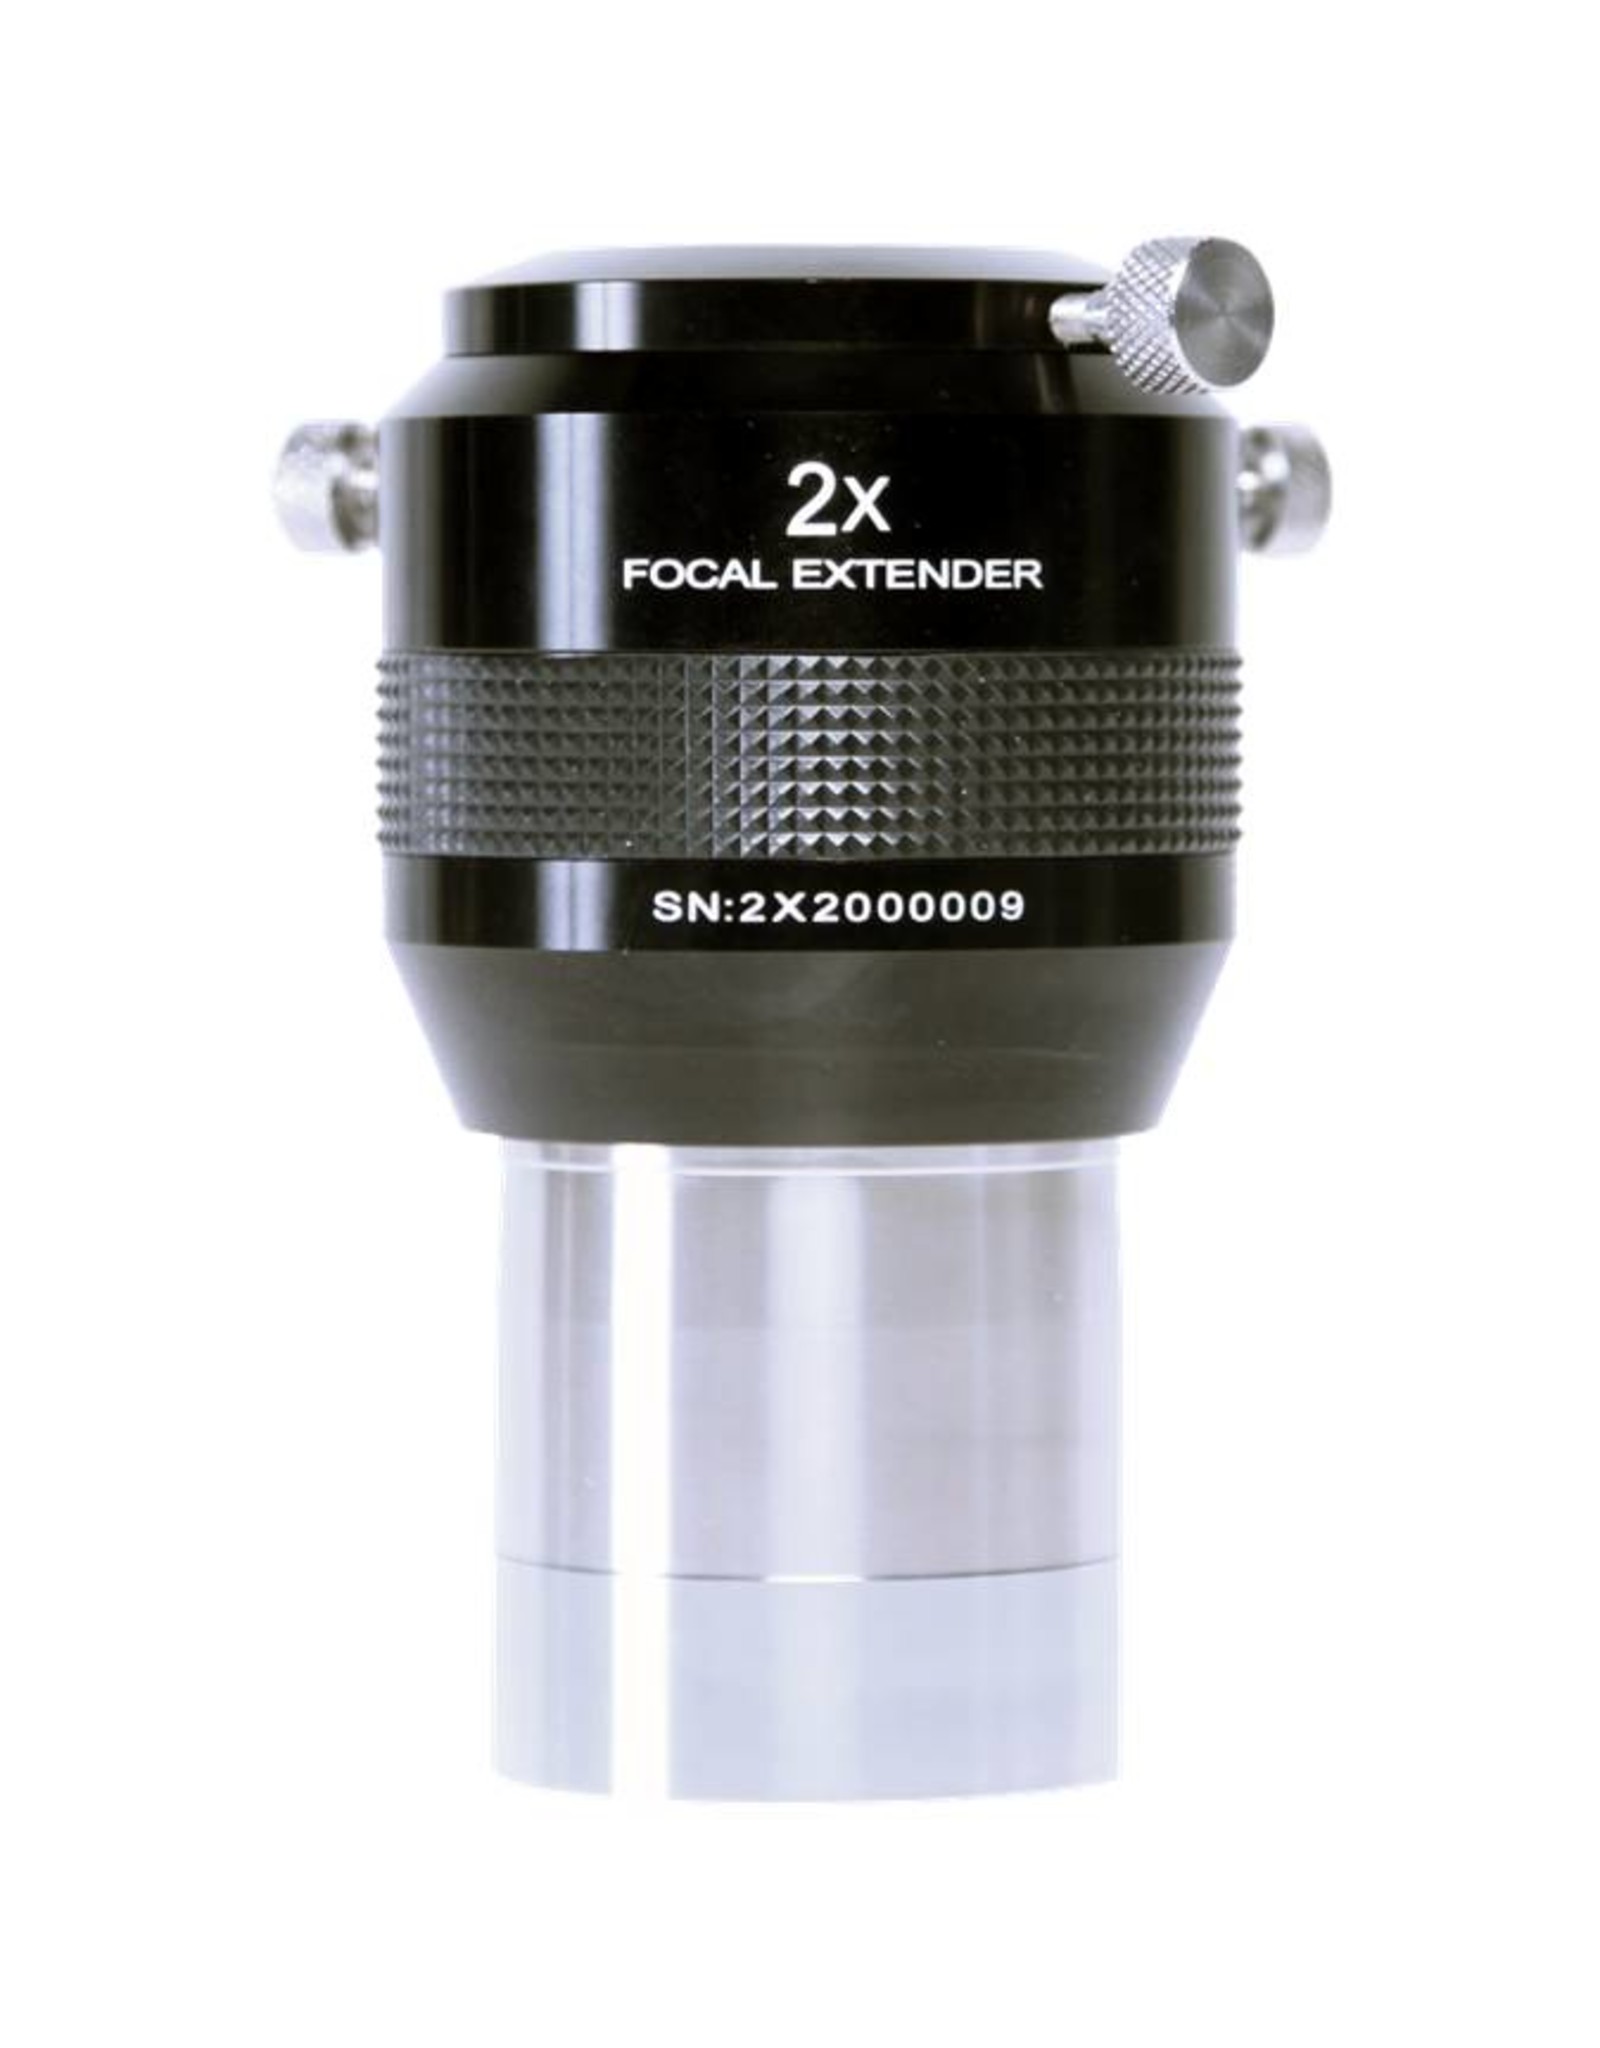 Explore Scientific Explore Scientific 2x Focal Extender; 2.0-inch O.D. Barrel with 1.25-inch O.D. Adapter